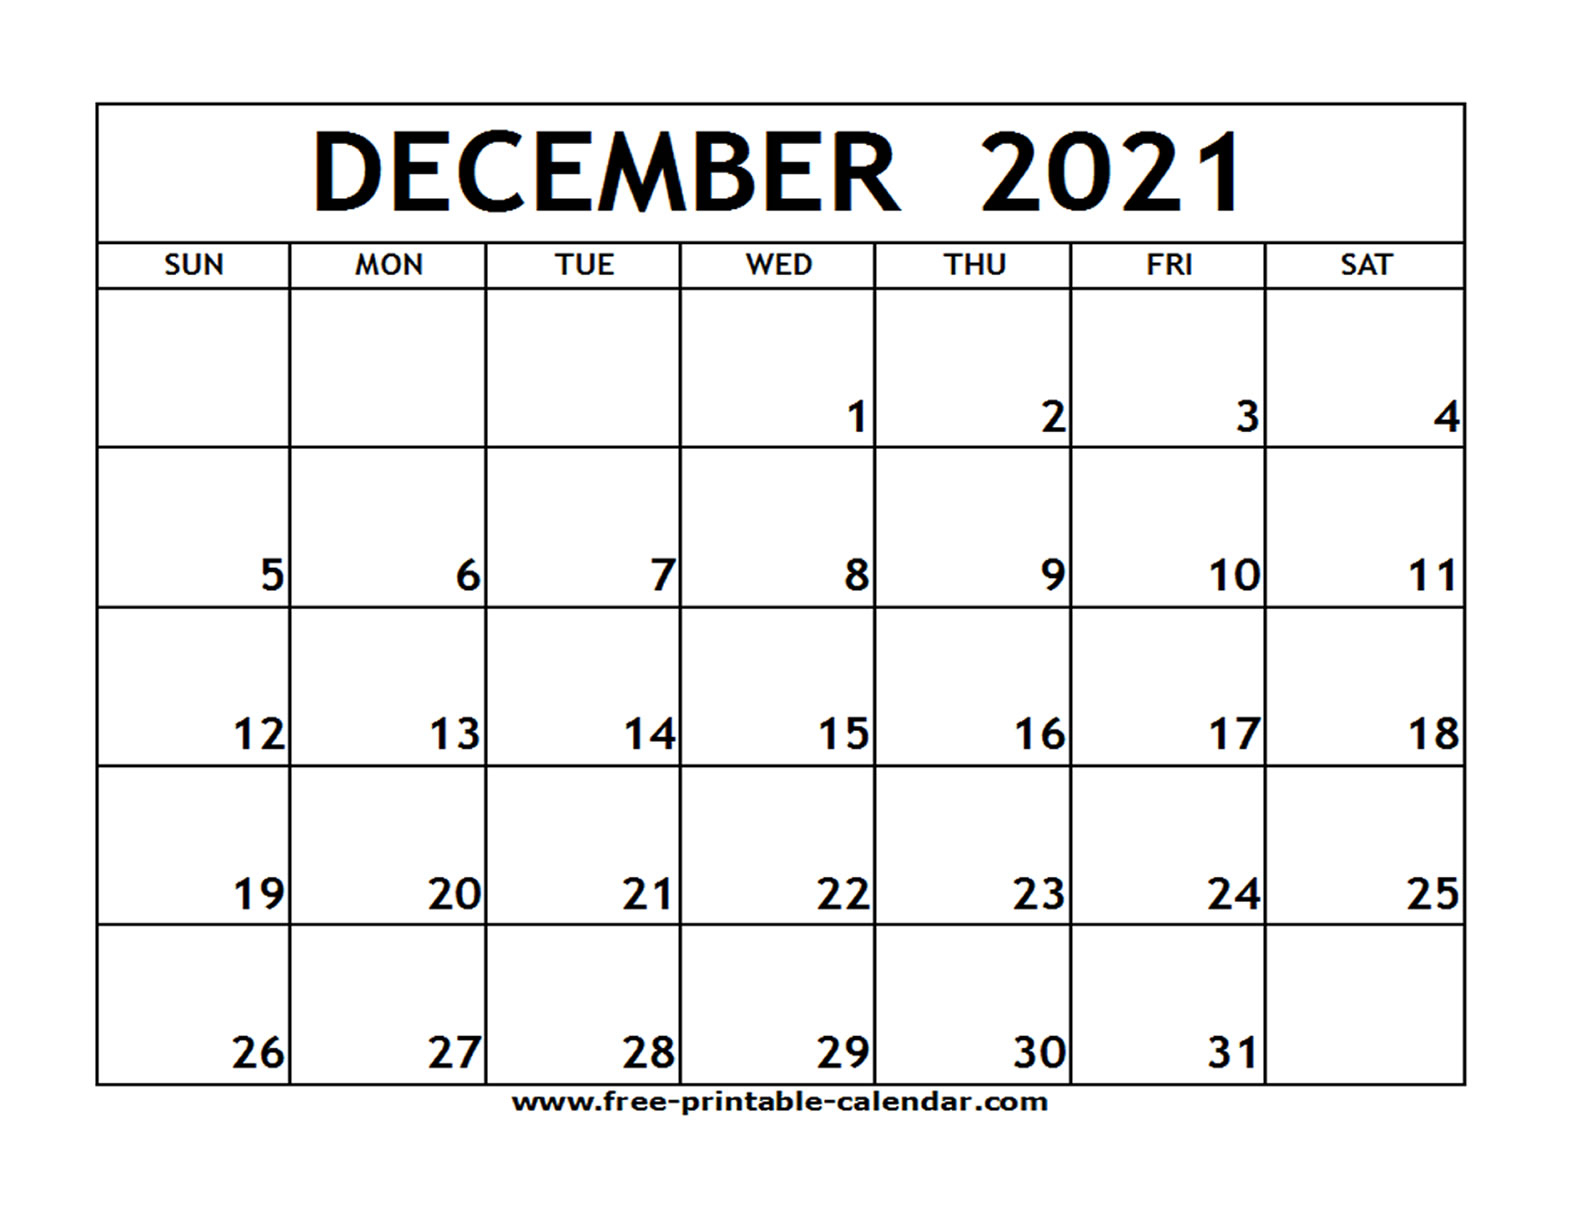 December 2021 Printable Calendar - Free-Printable-Calendar